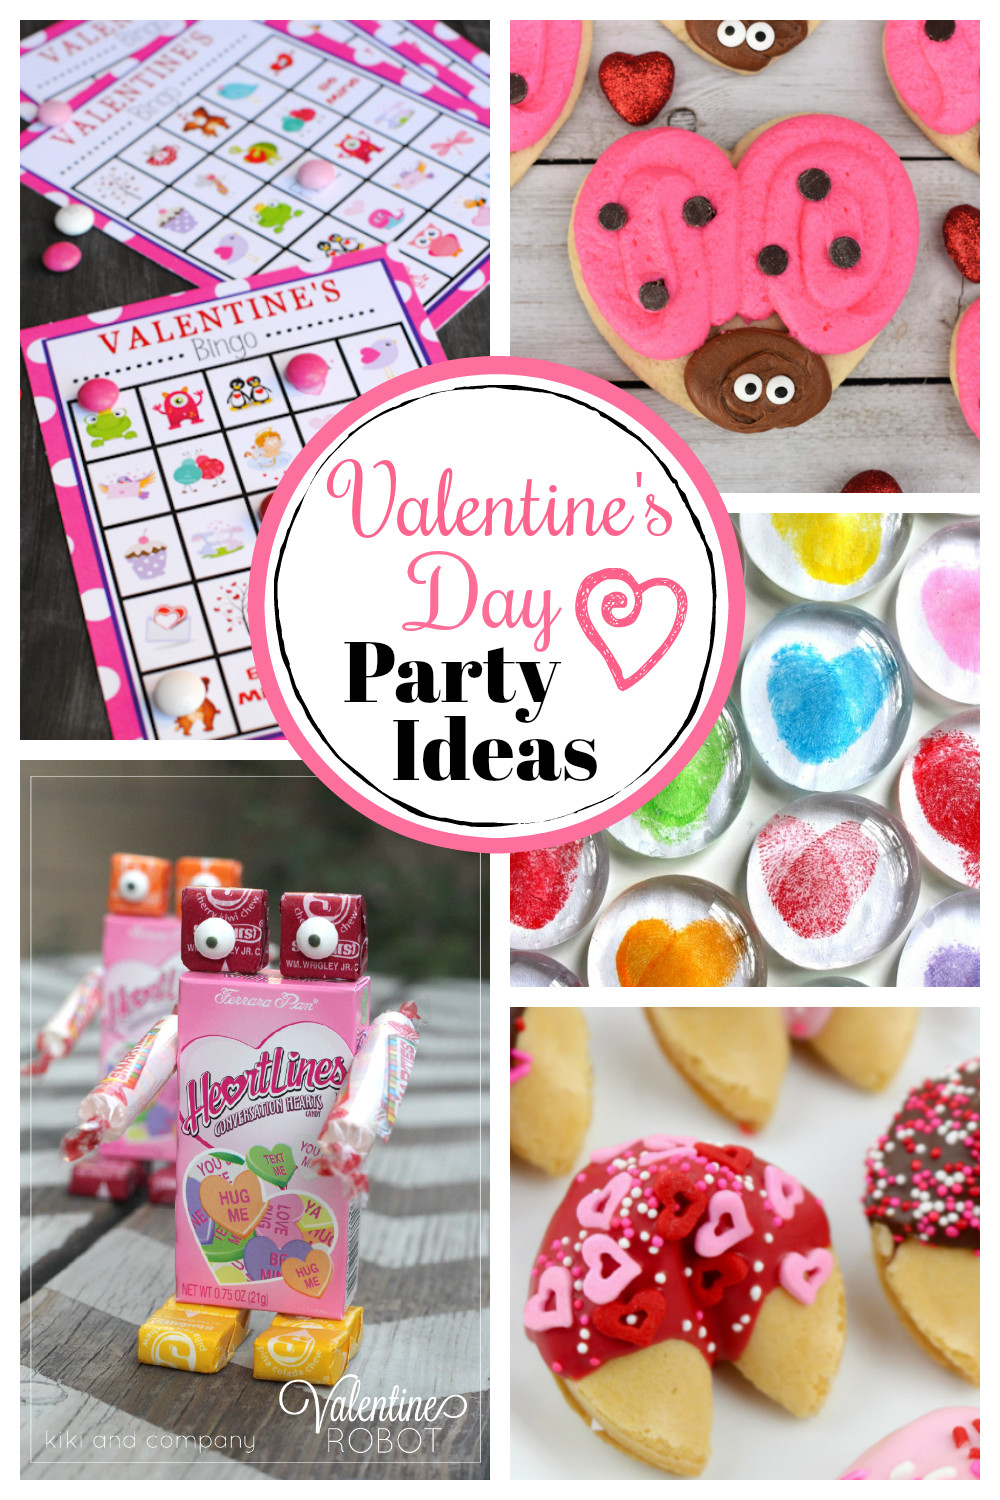 Valentines Day Ideas Pinterest
 Fun Valentine s Day Party Ideas – Fun Squared